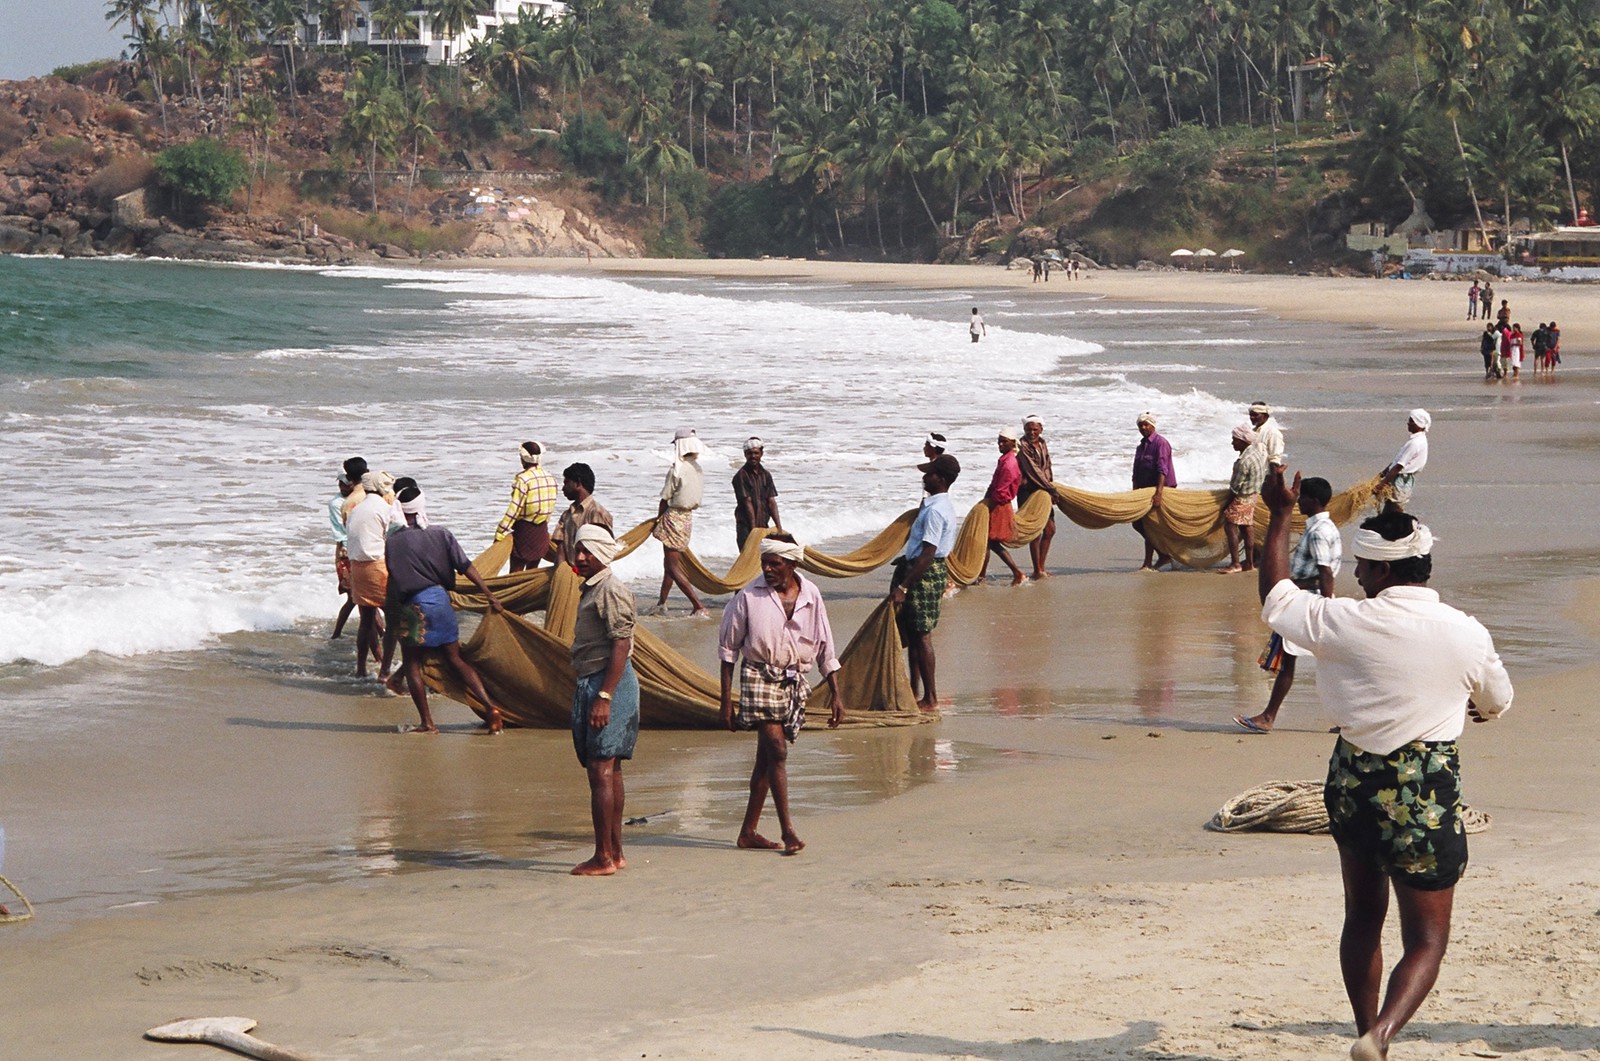 Fishermen gathering their nets